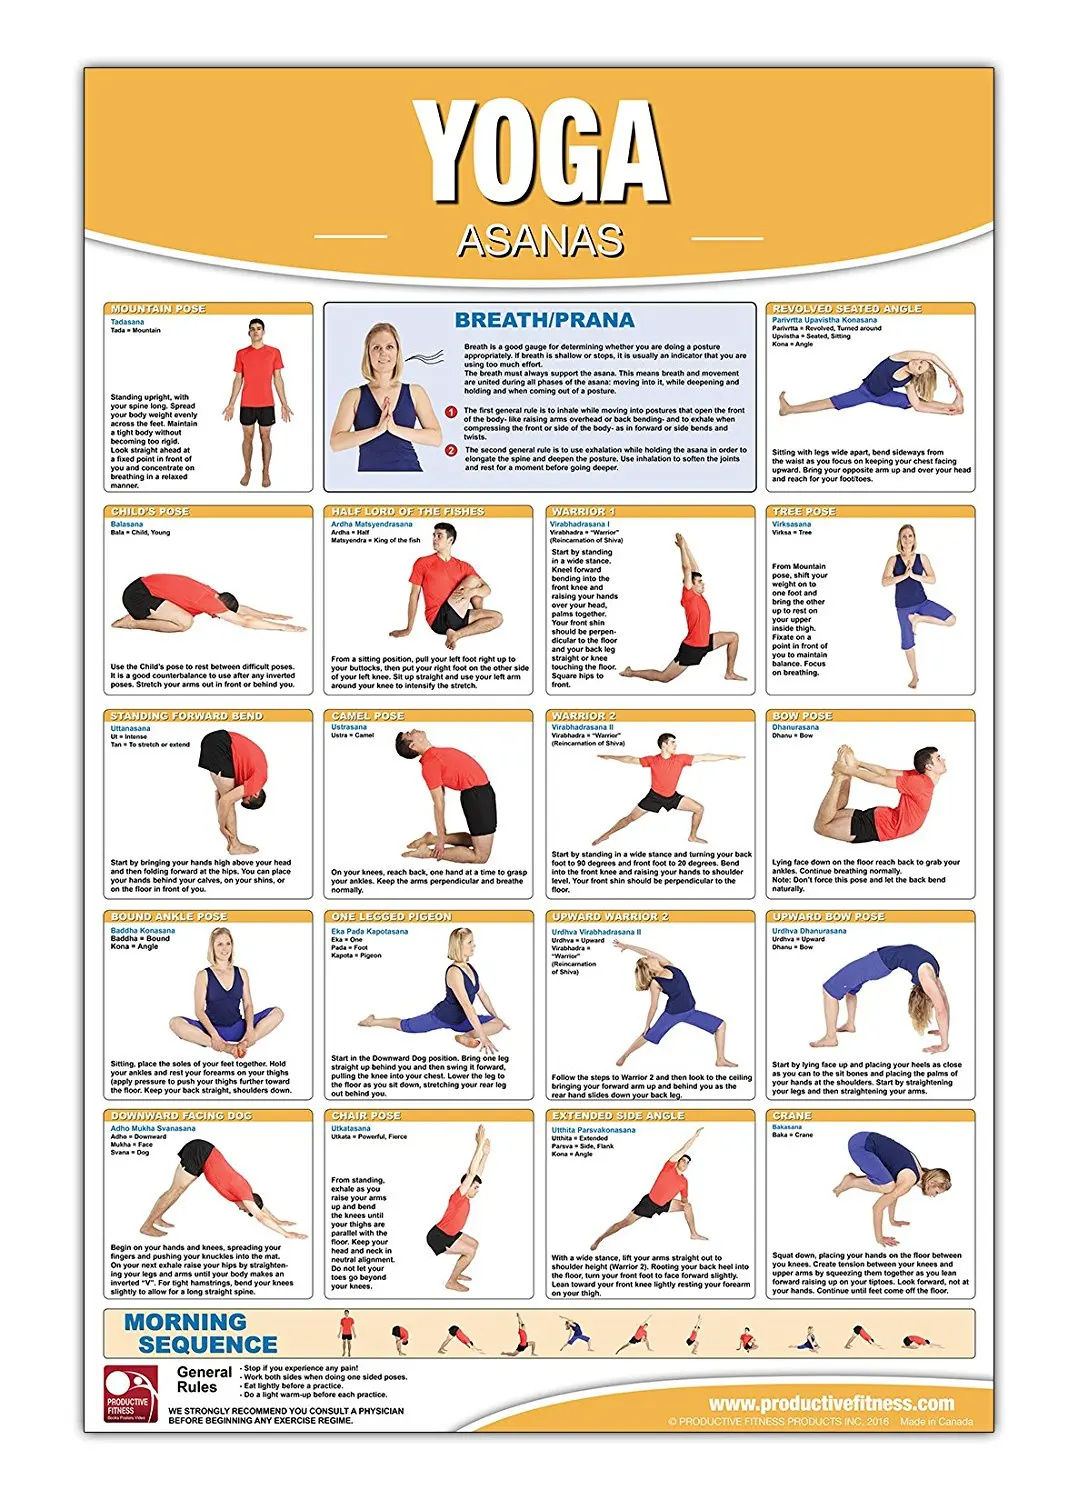 weight loss beginner yoga poses chart weightlol - bikram yoga poses ...